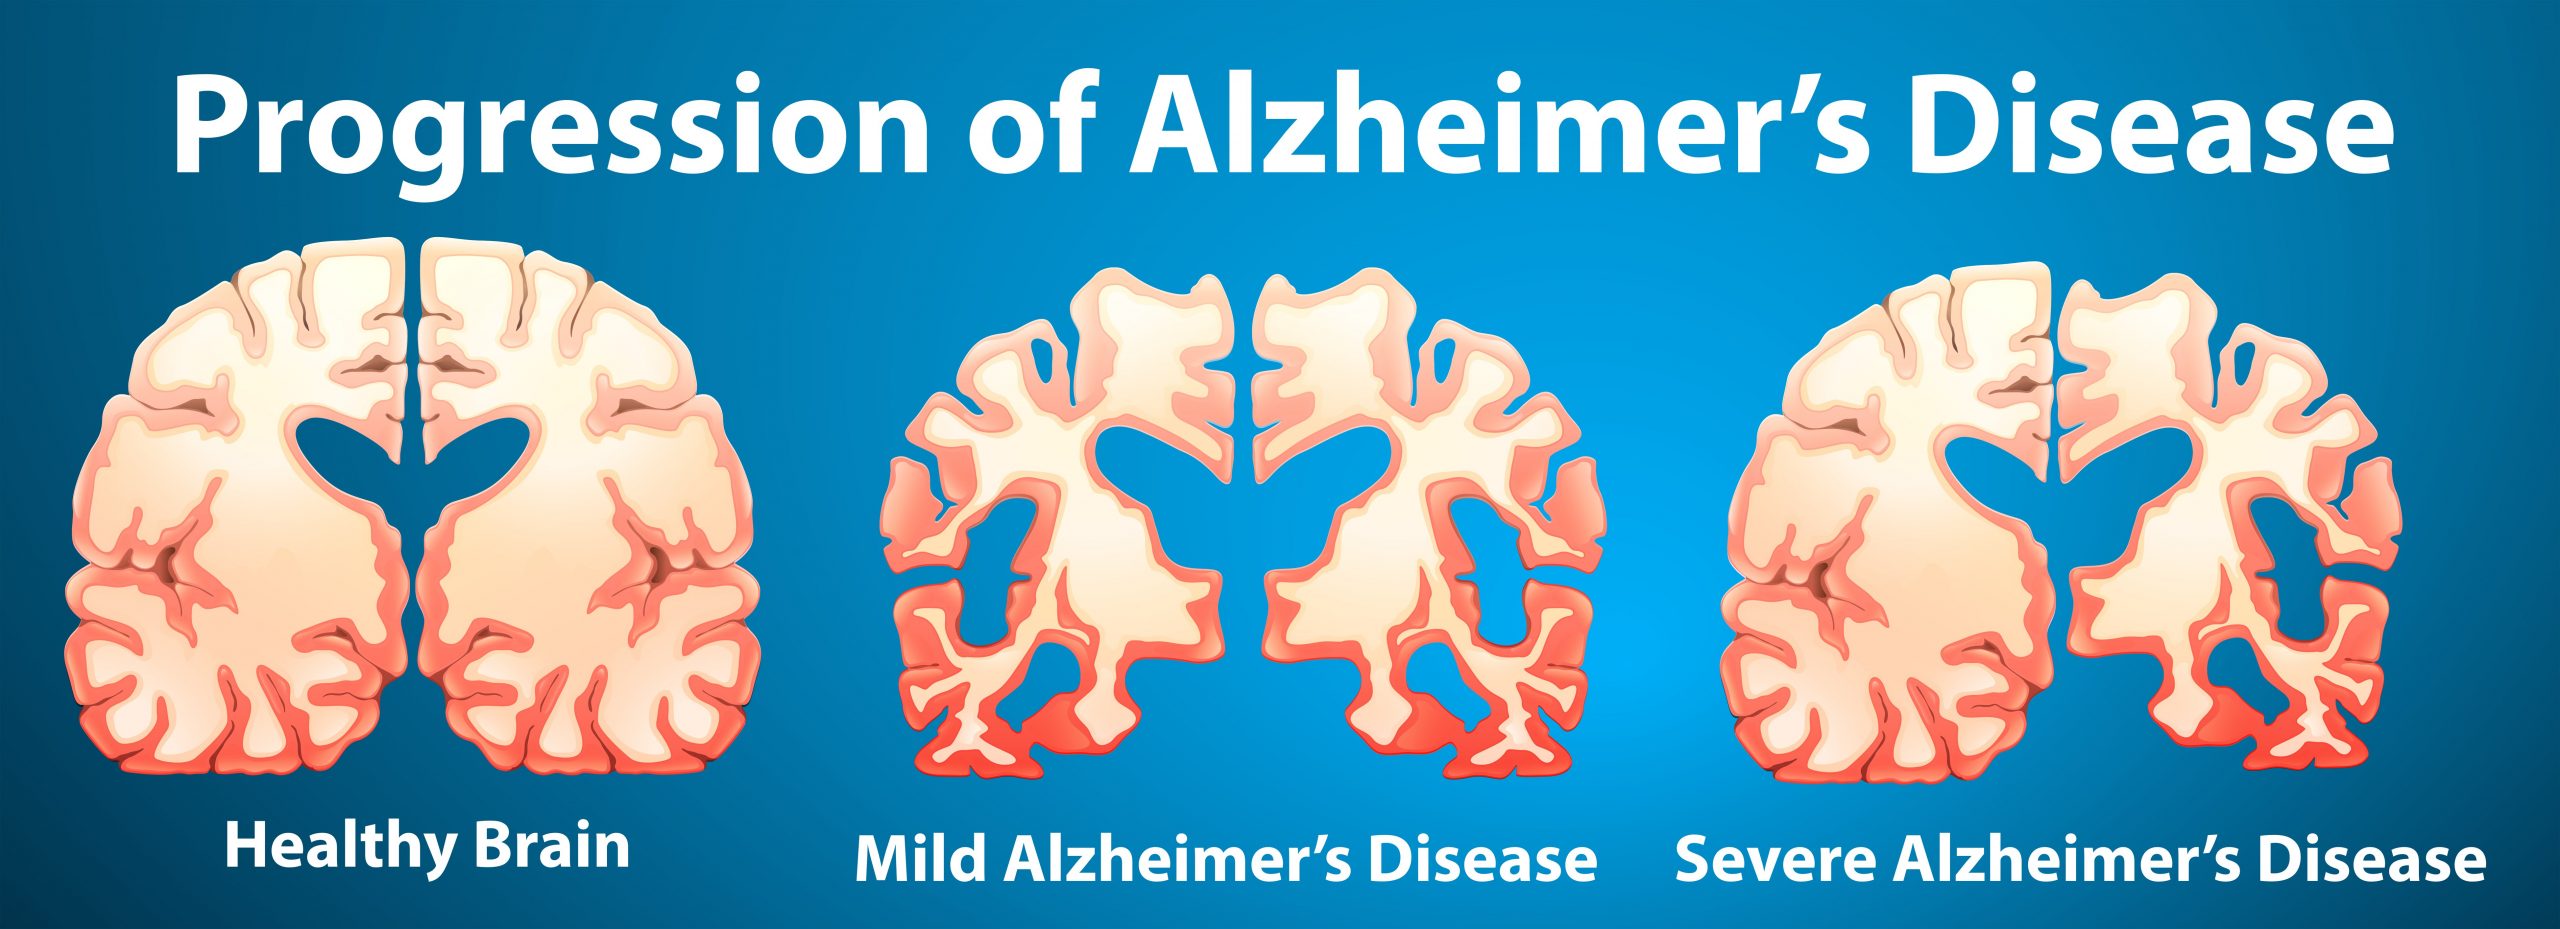 Progression of Alzheimer